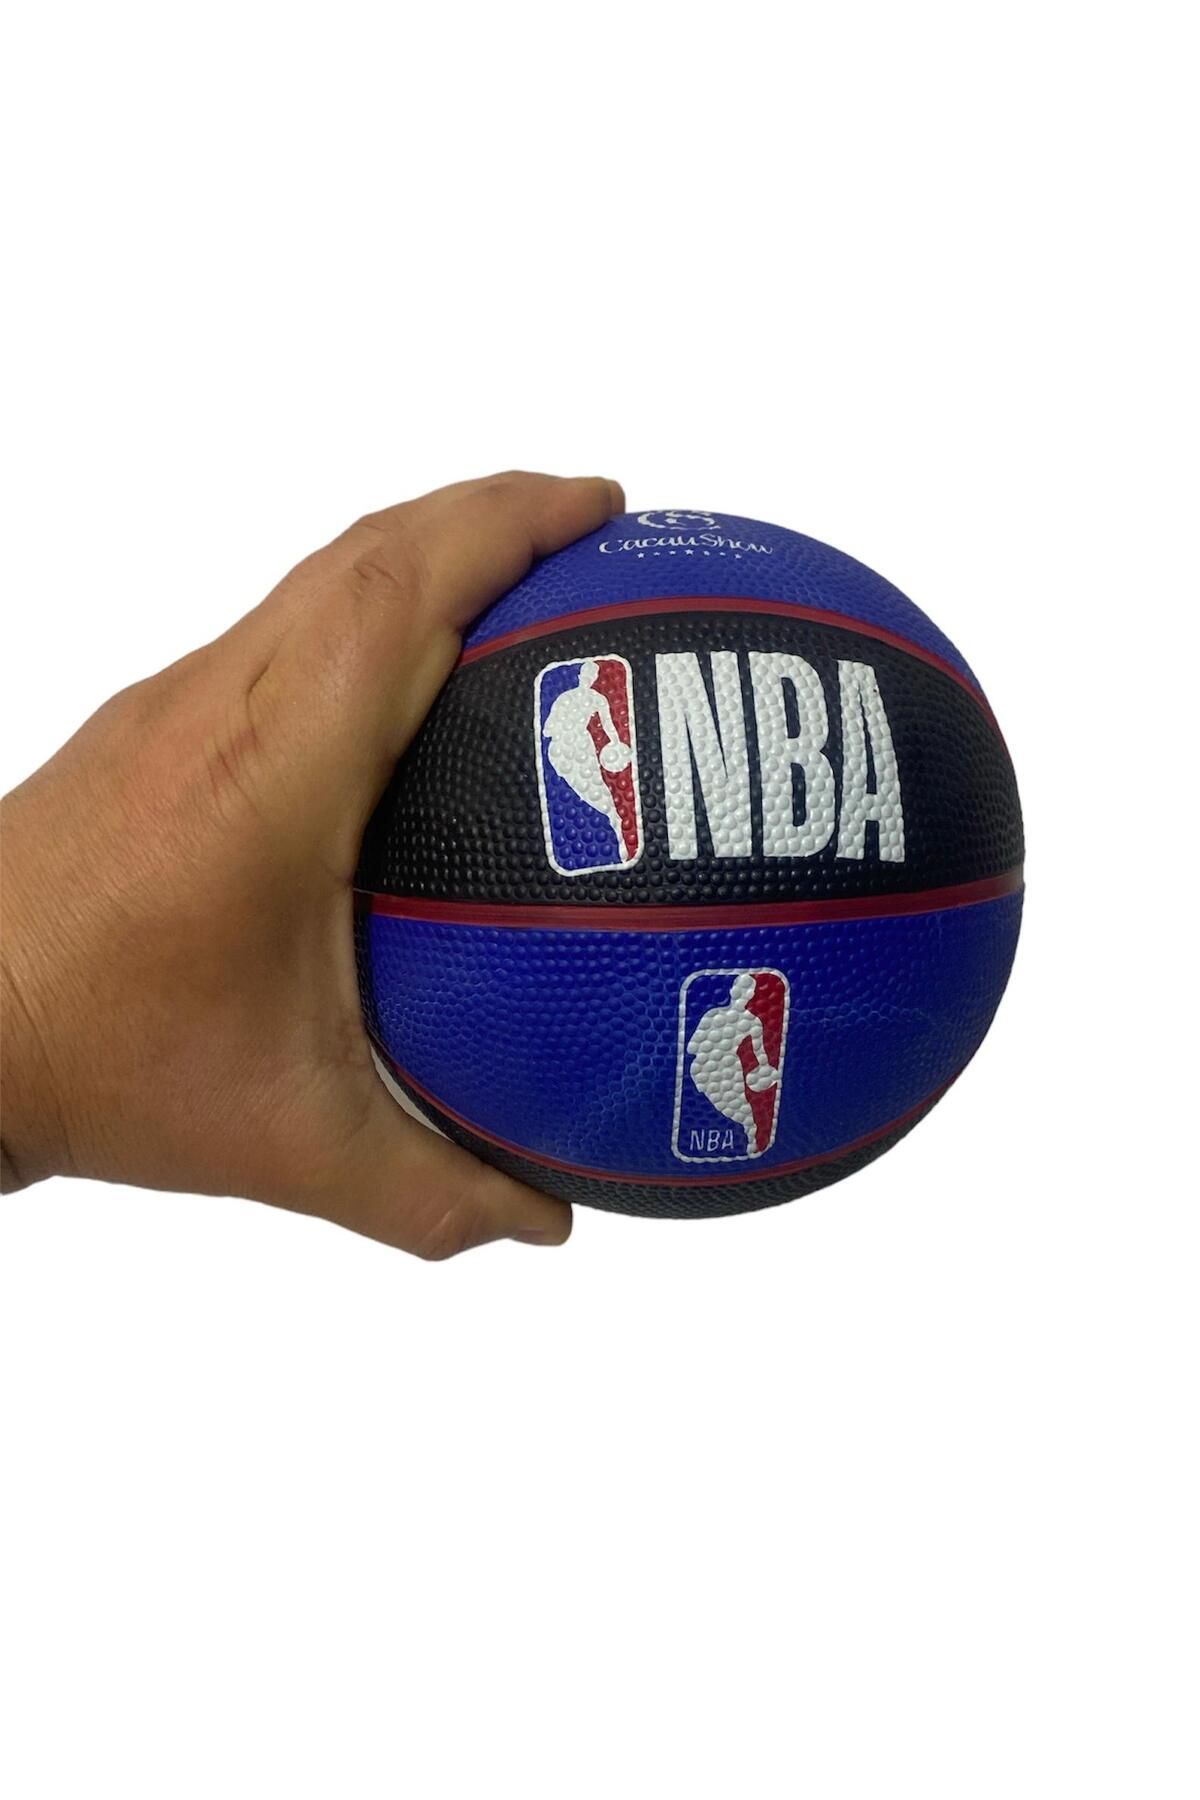 NBA Çocuk Mini Basketbol Topu - 1 Numara